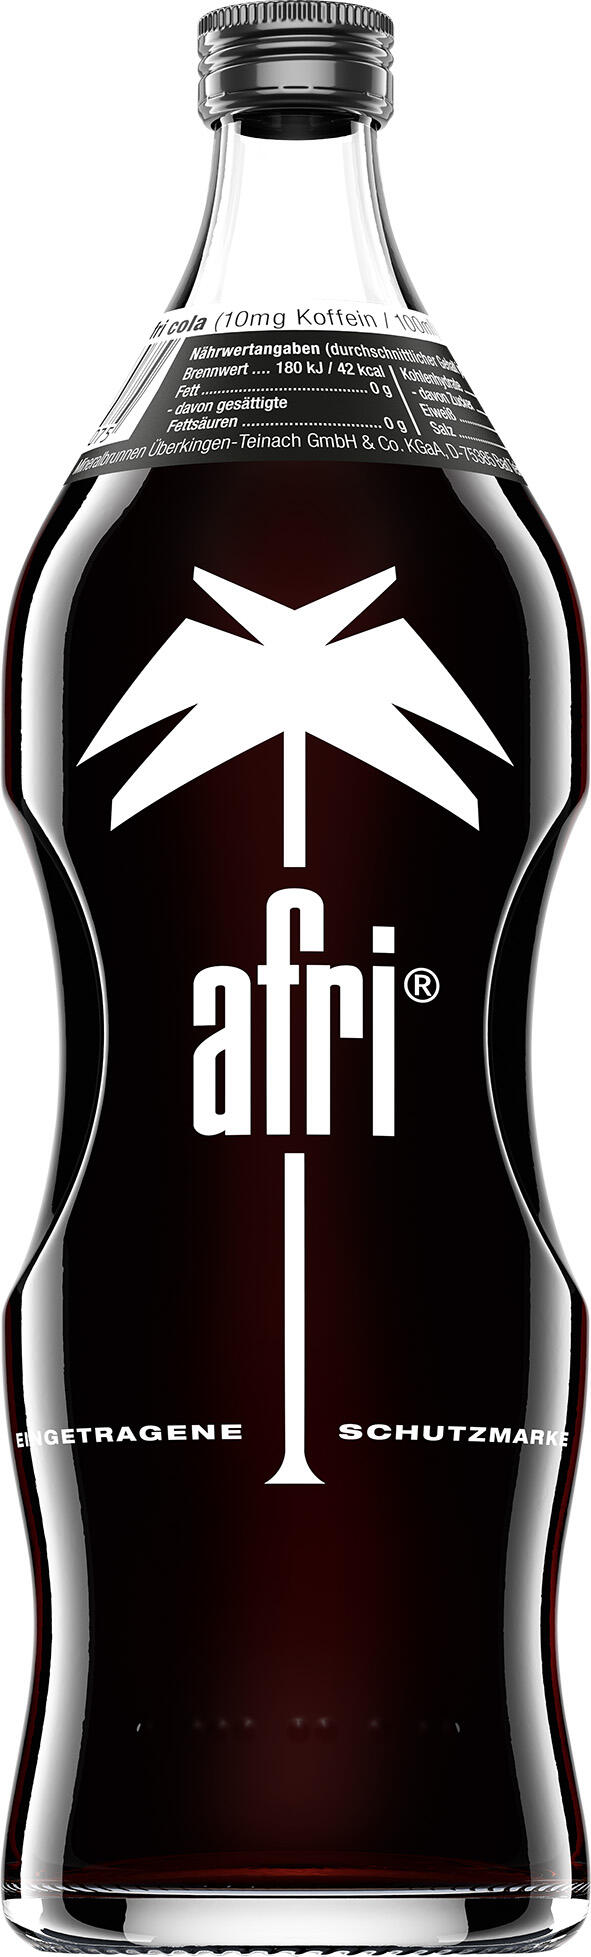 Afri Cola Afri Cola (10 mg) 6 x 1 lit ( Vidange inclus)